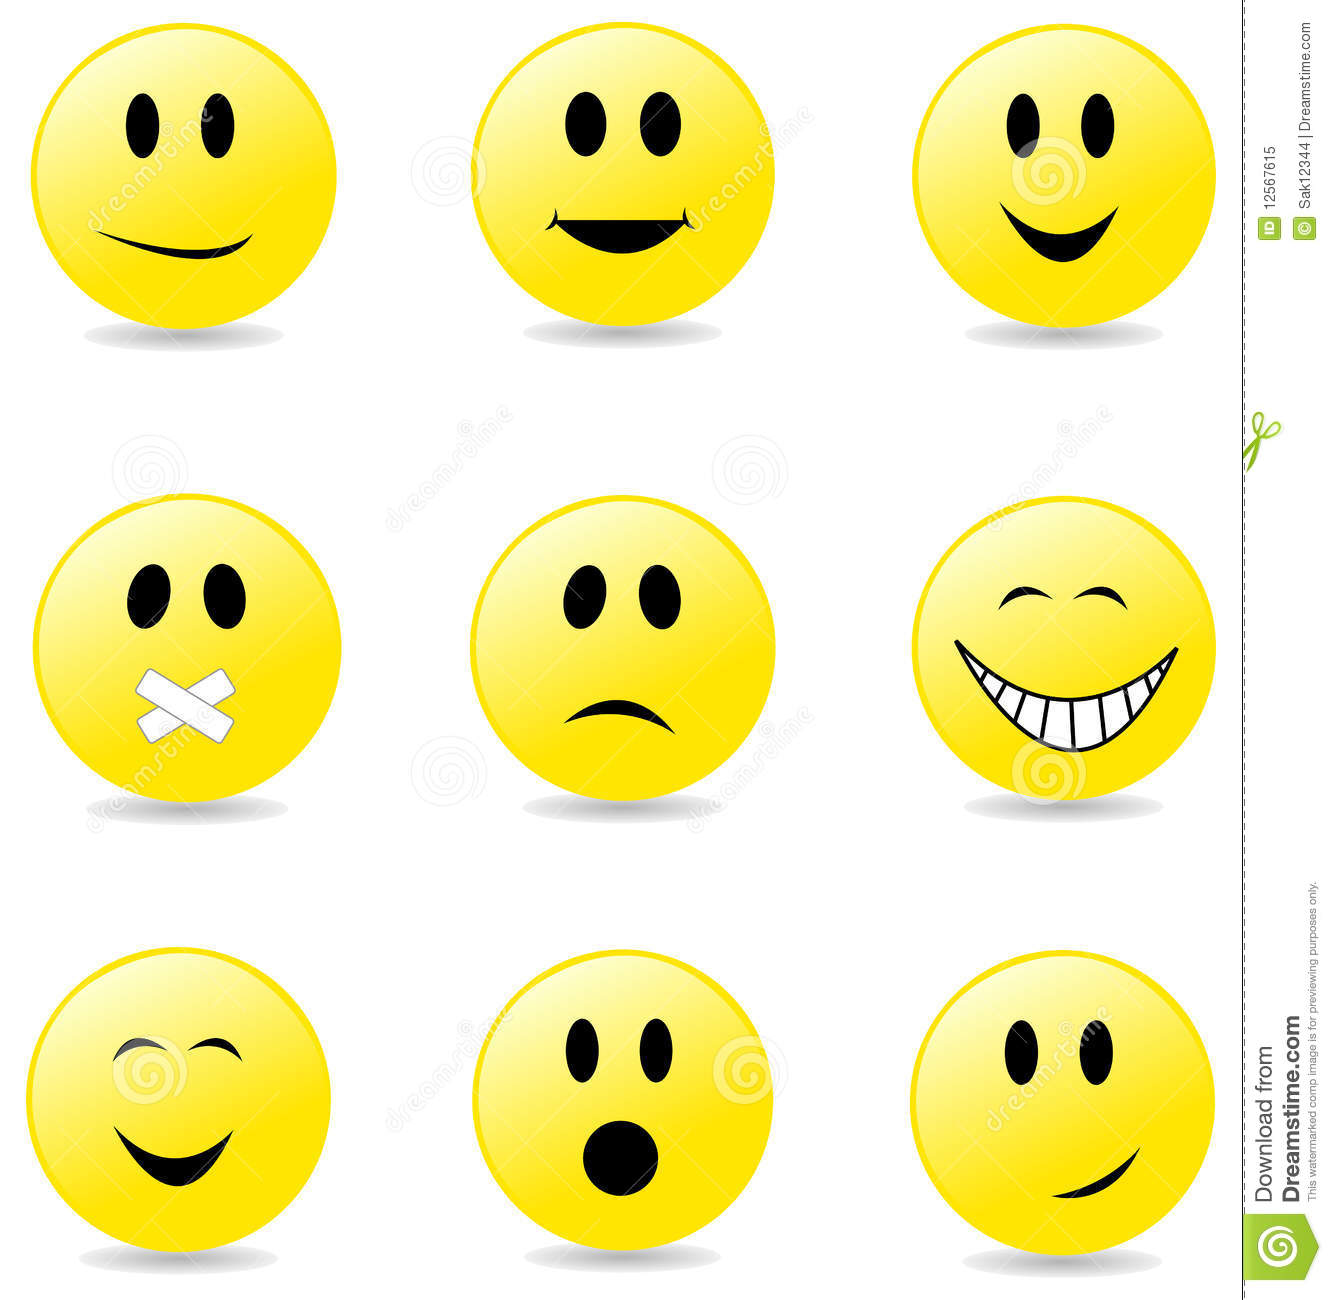 Free Vector Smiley Faces